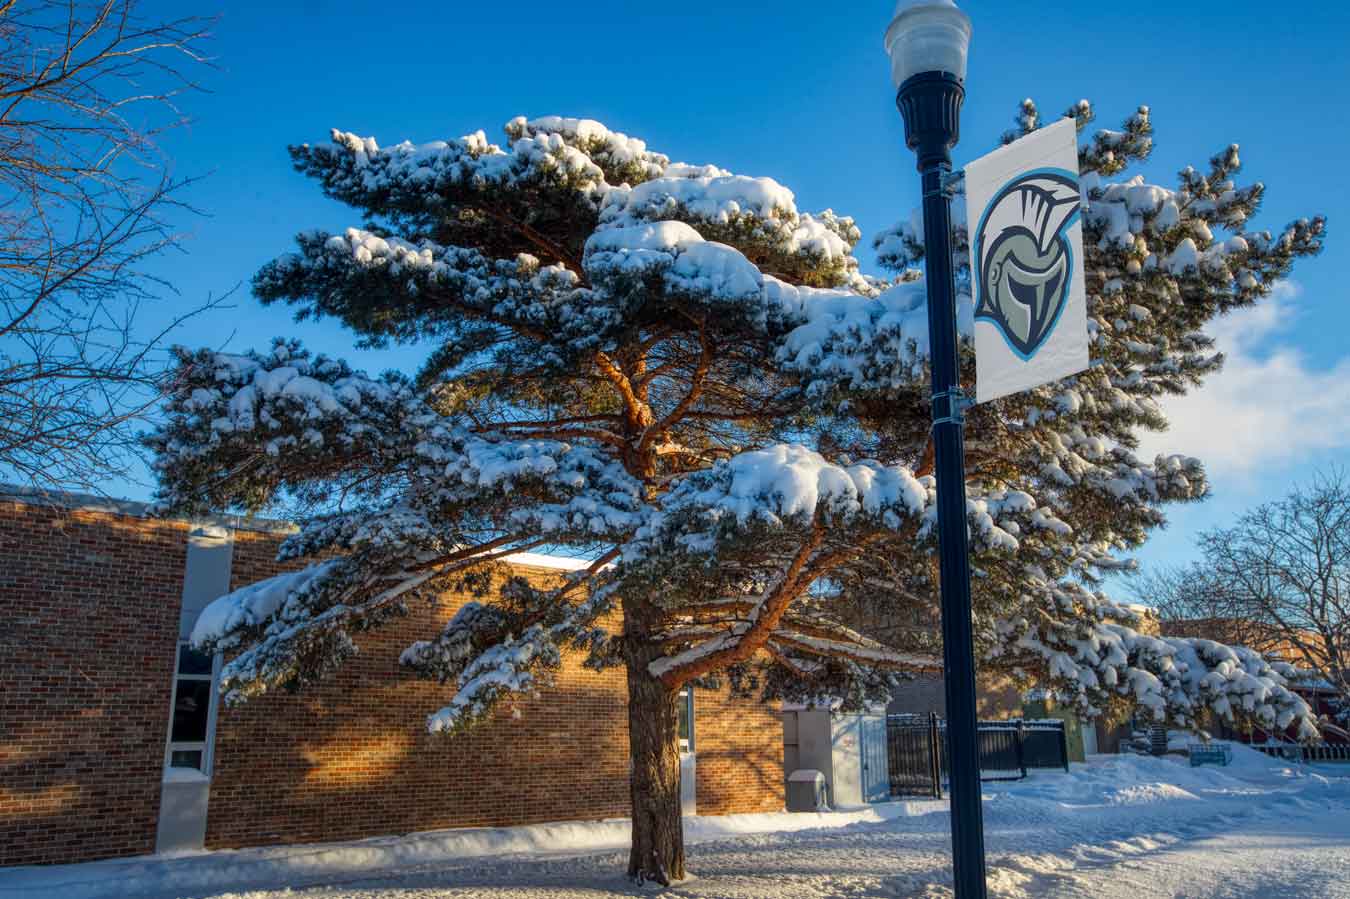 Winter on campus, snow laden evergreen tree